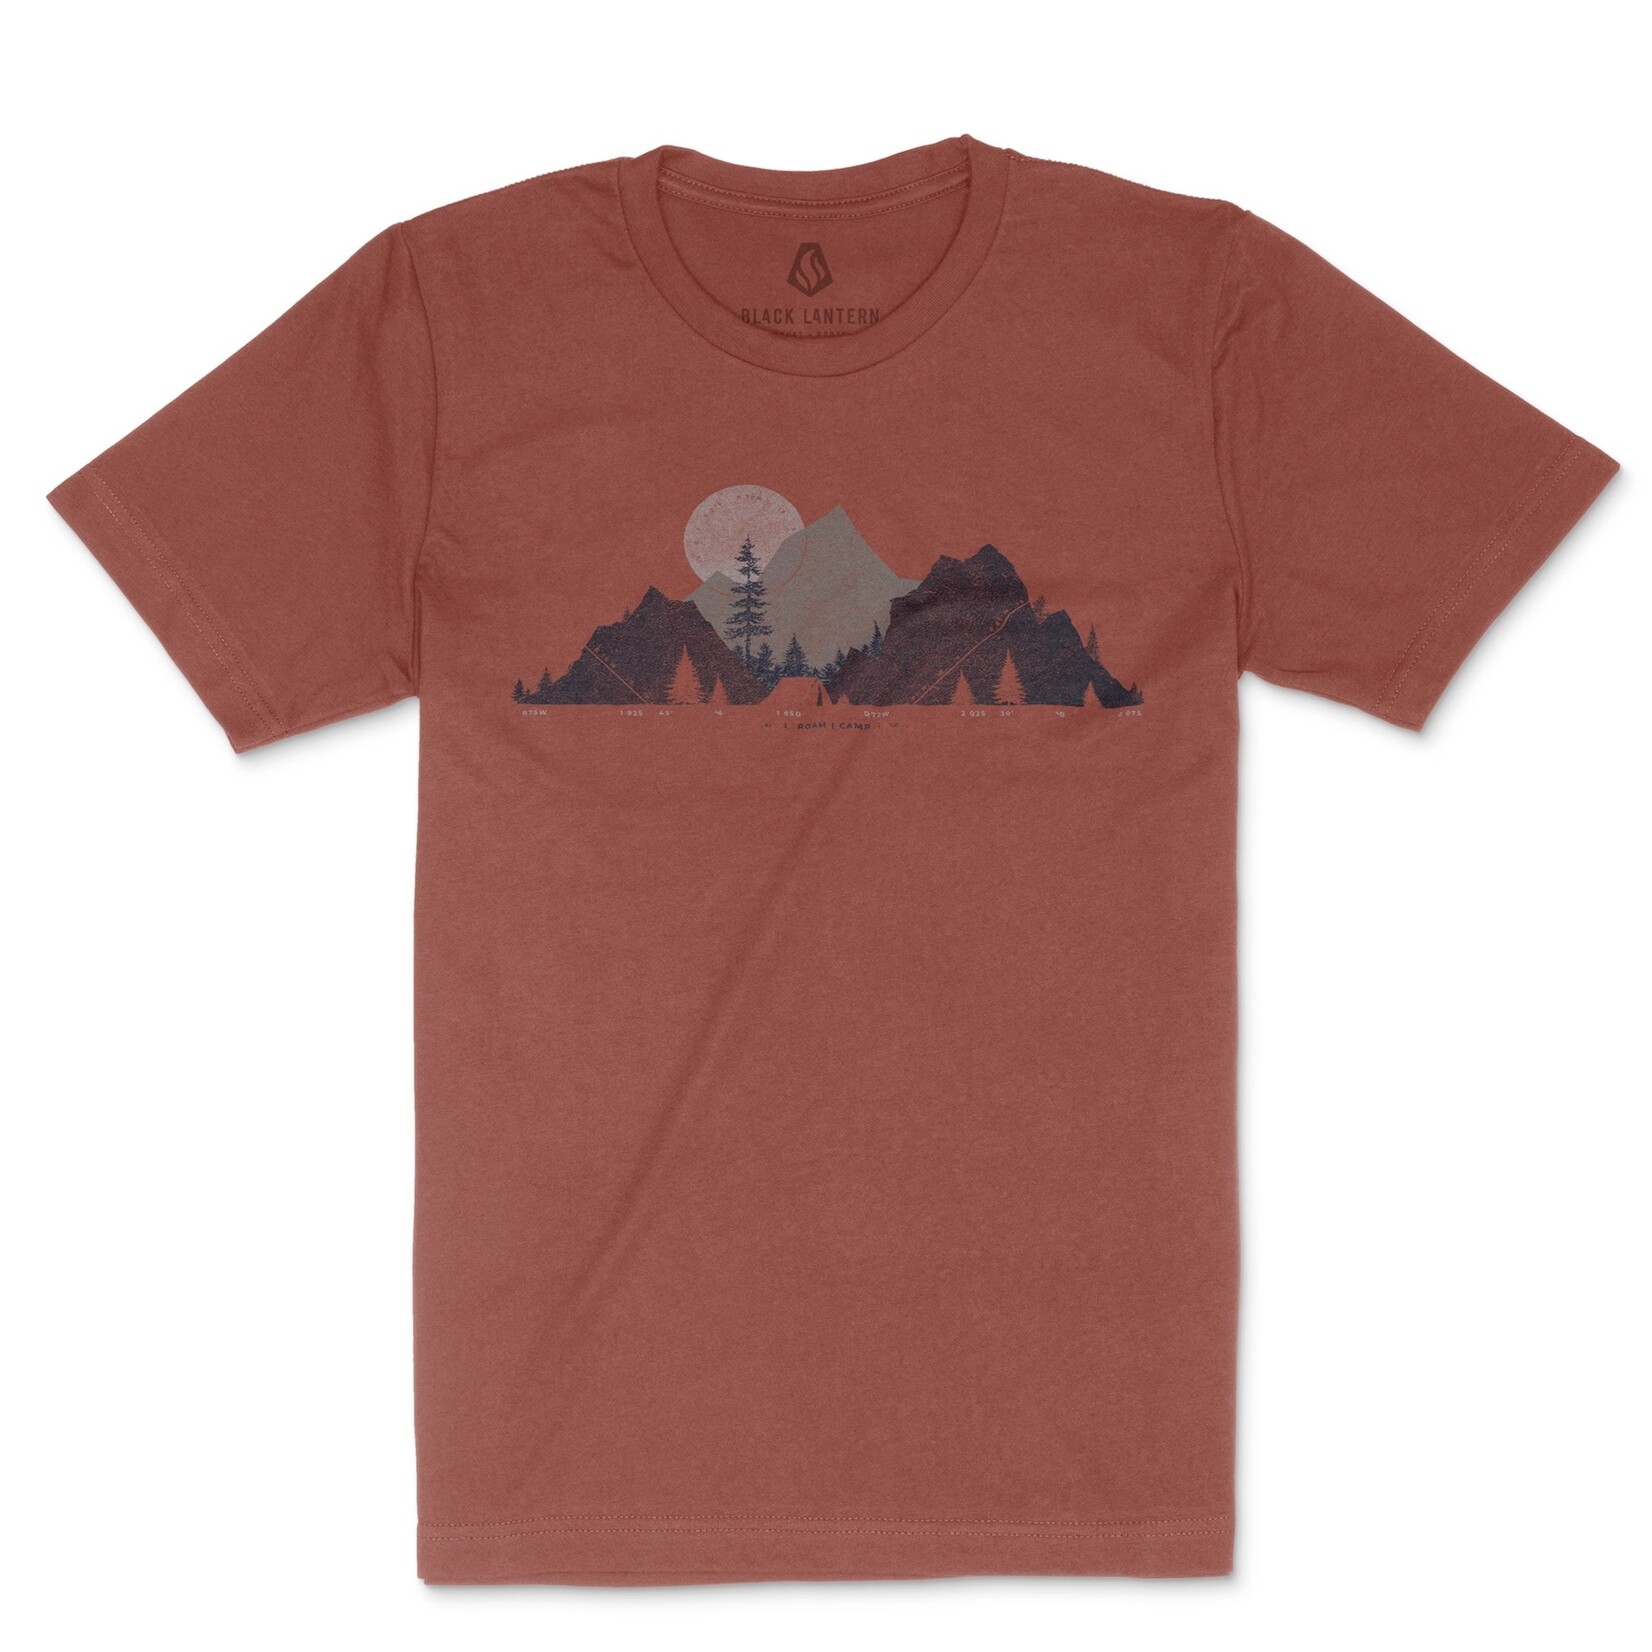 Black Lantern Camp & Topo Men's Camping Themed T-Shirt